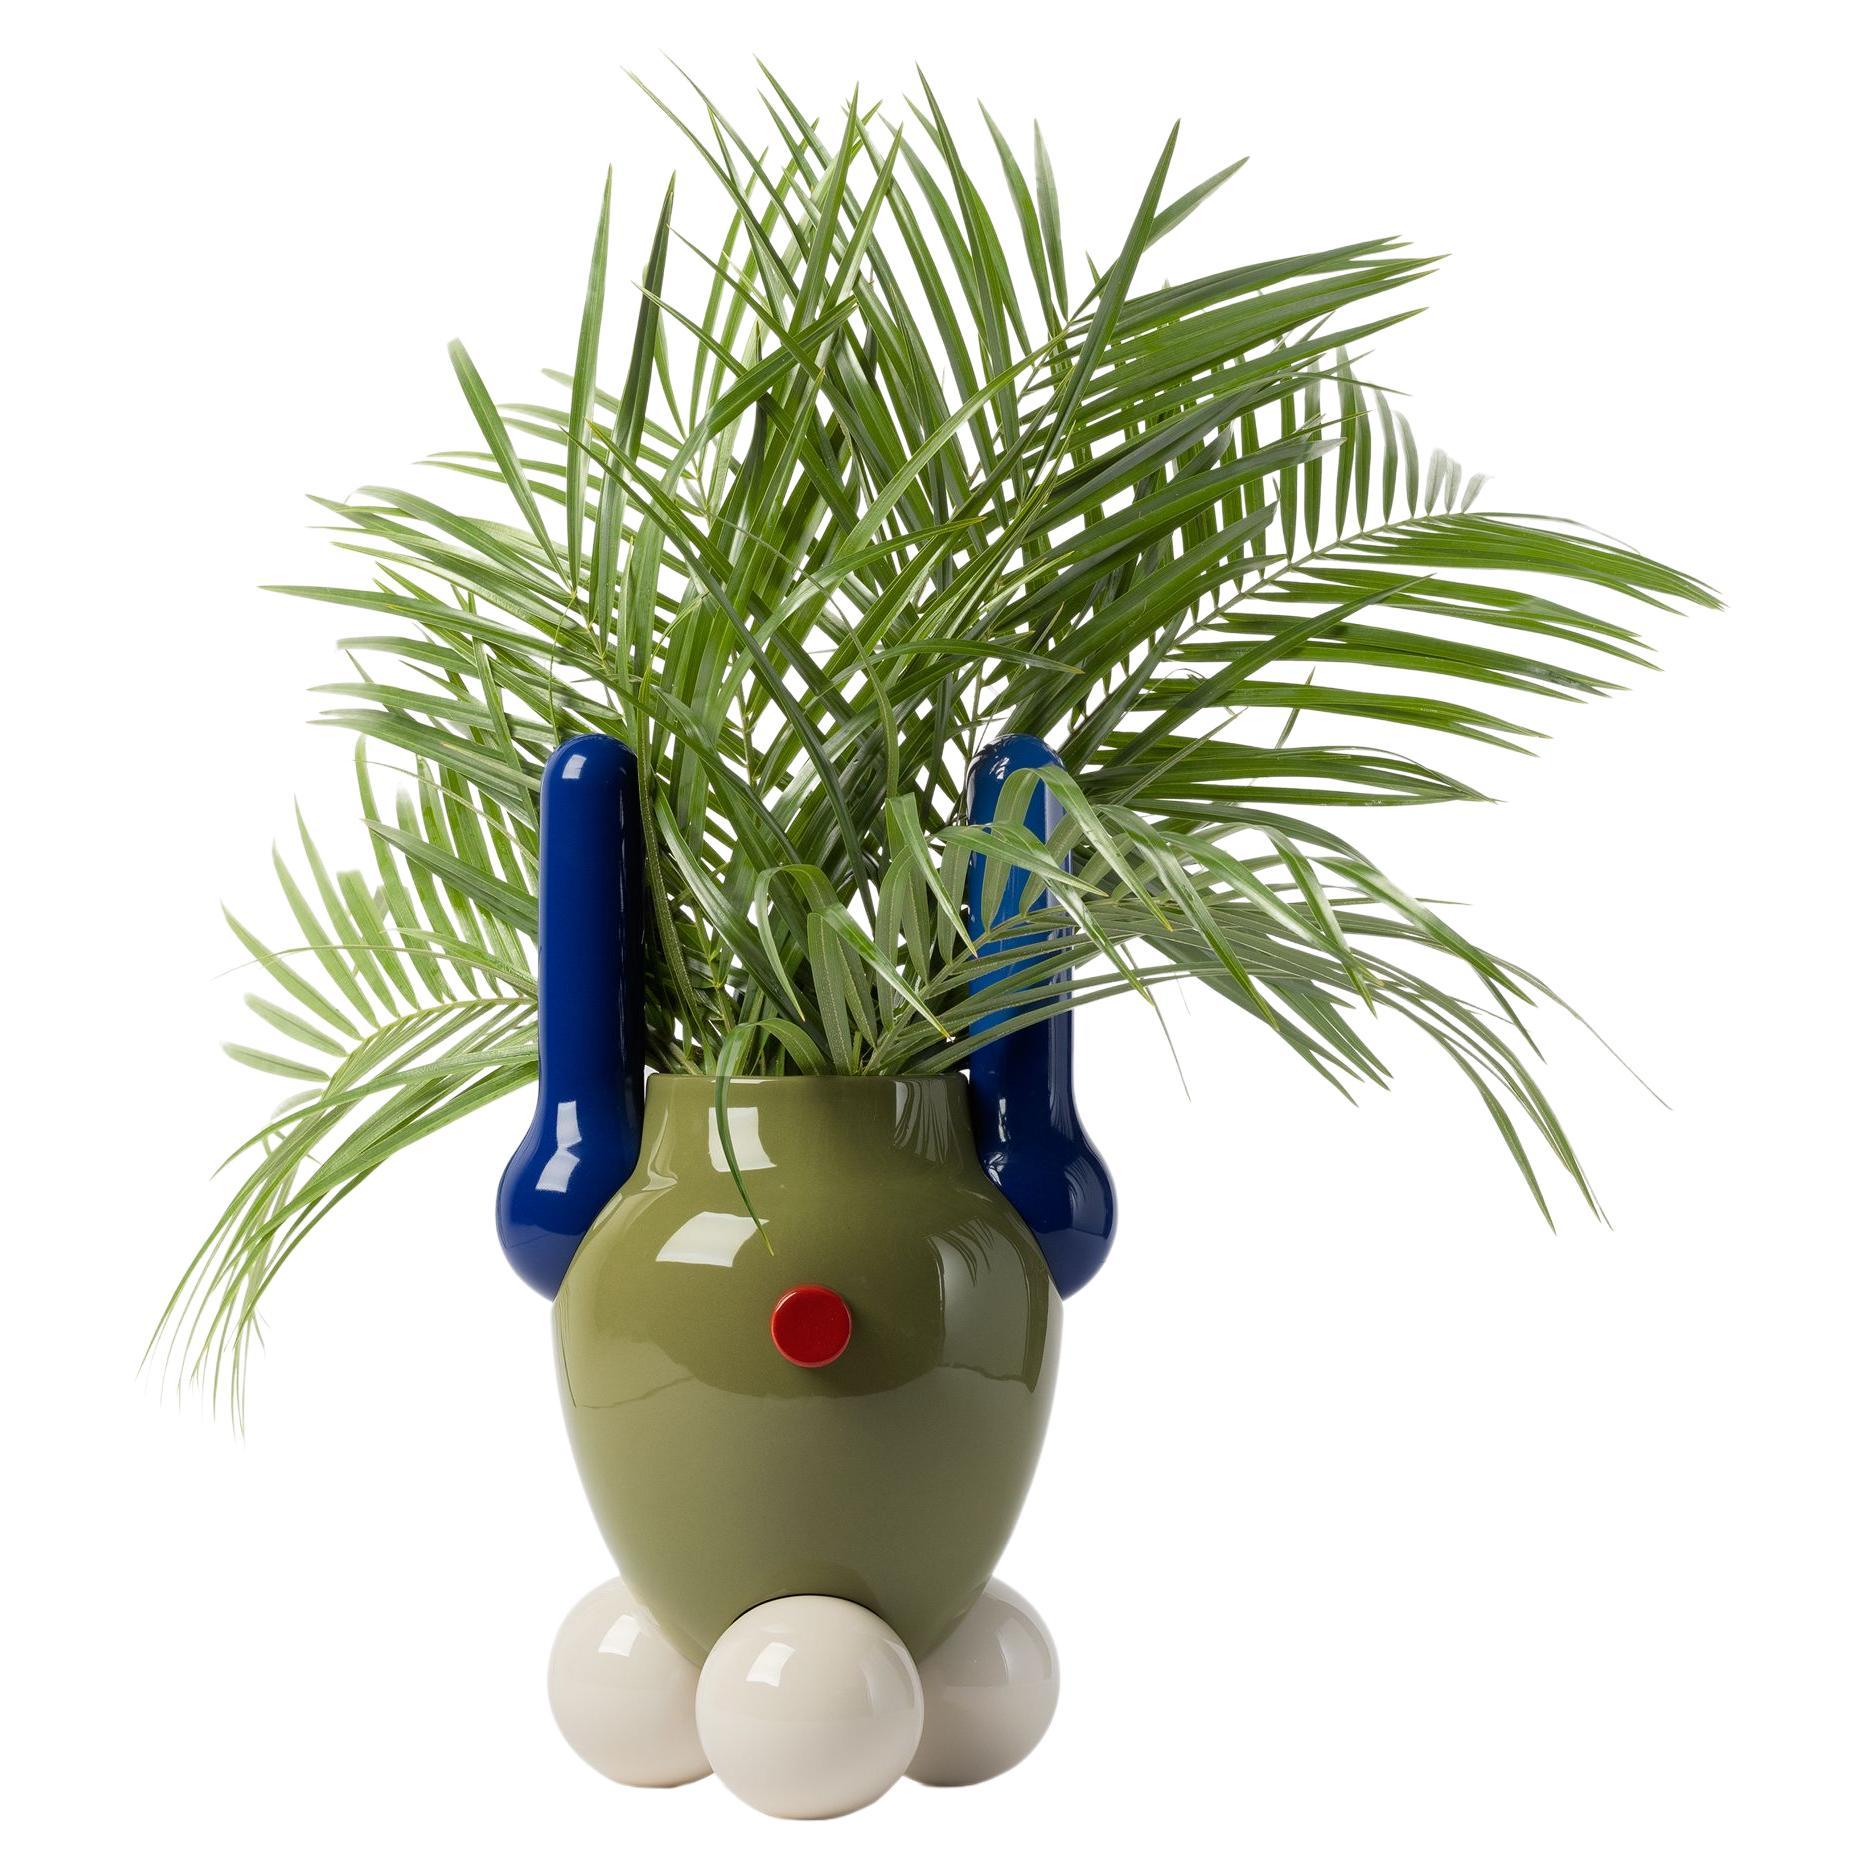 Contemporary Glazed Ceramic Explorer Vase No.1 by Jaime Hayon, green, blue white For Sale